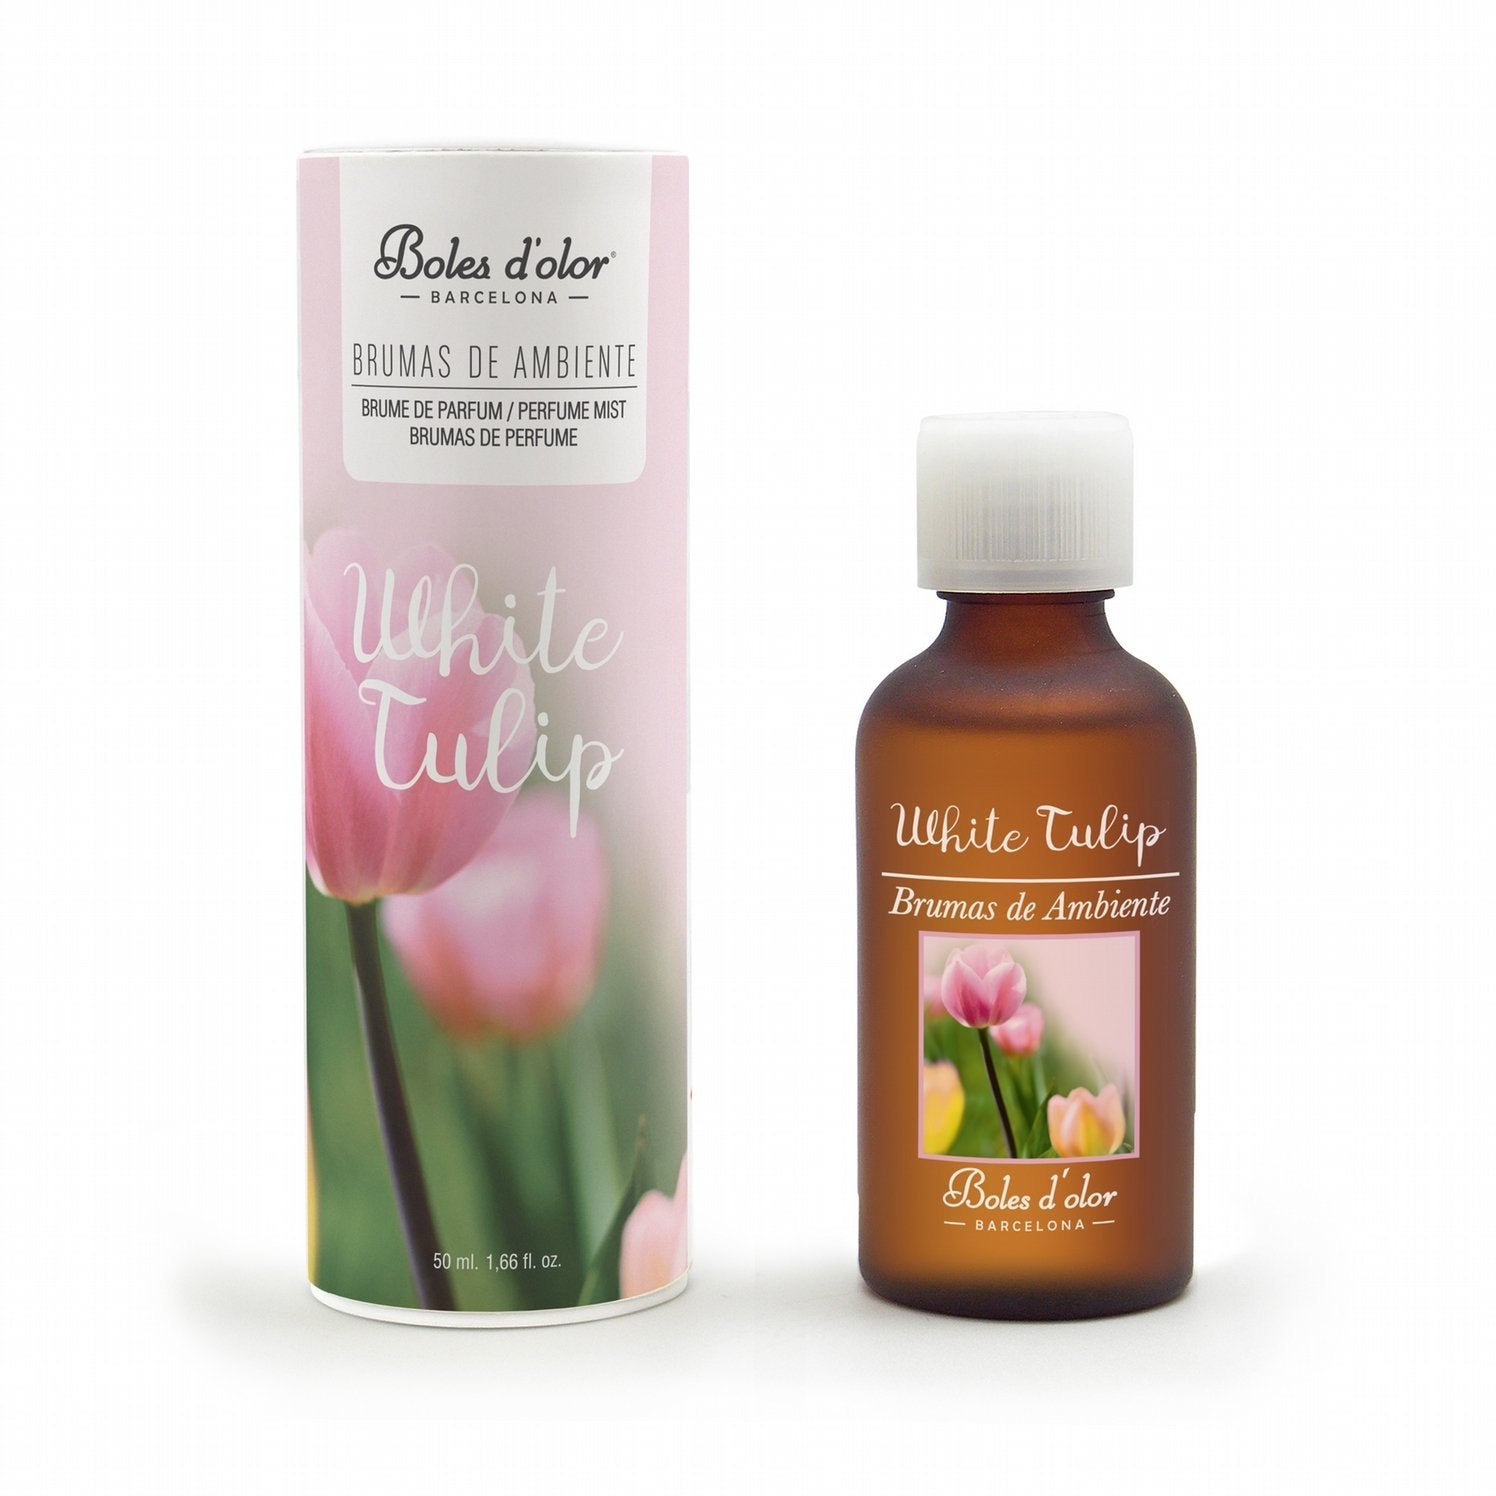 Boles d'olor White Tulip Brumas de Ambiente Essence (50ml) - Boles d'olor Fragrance Mist Oils & Mist Diffusers from thetraditionalgiftshop.com